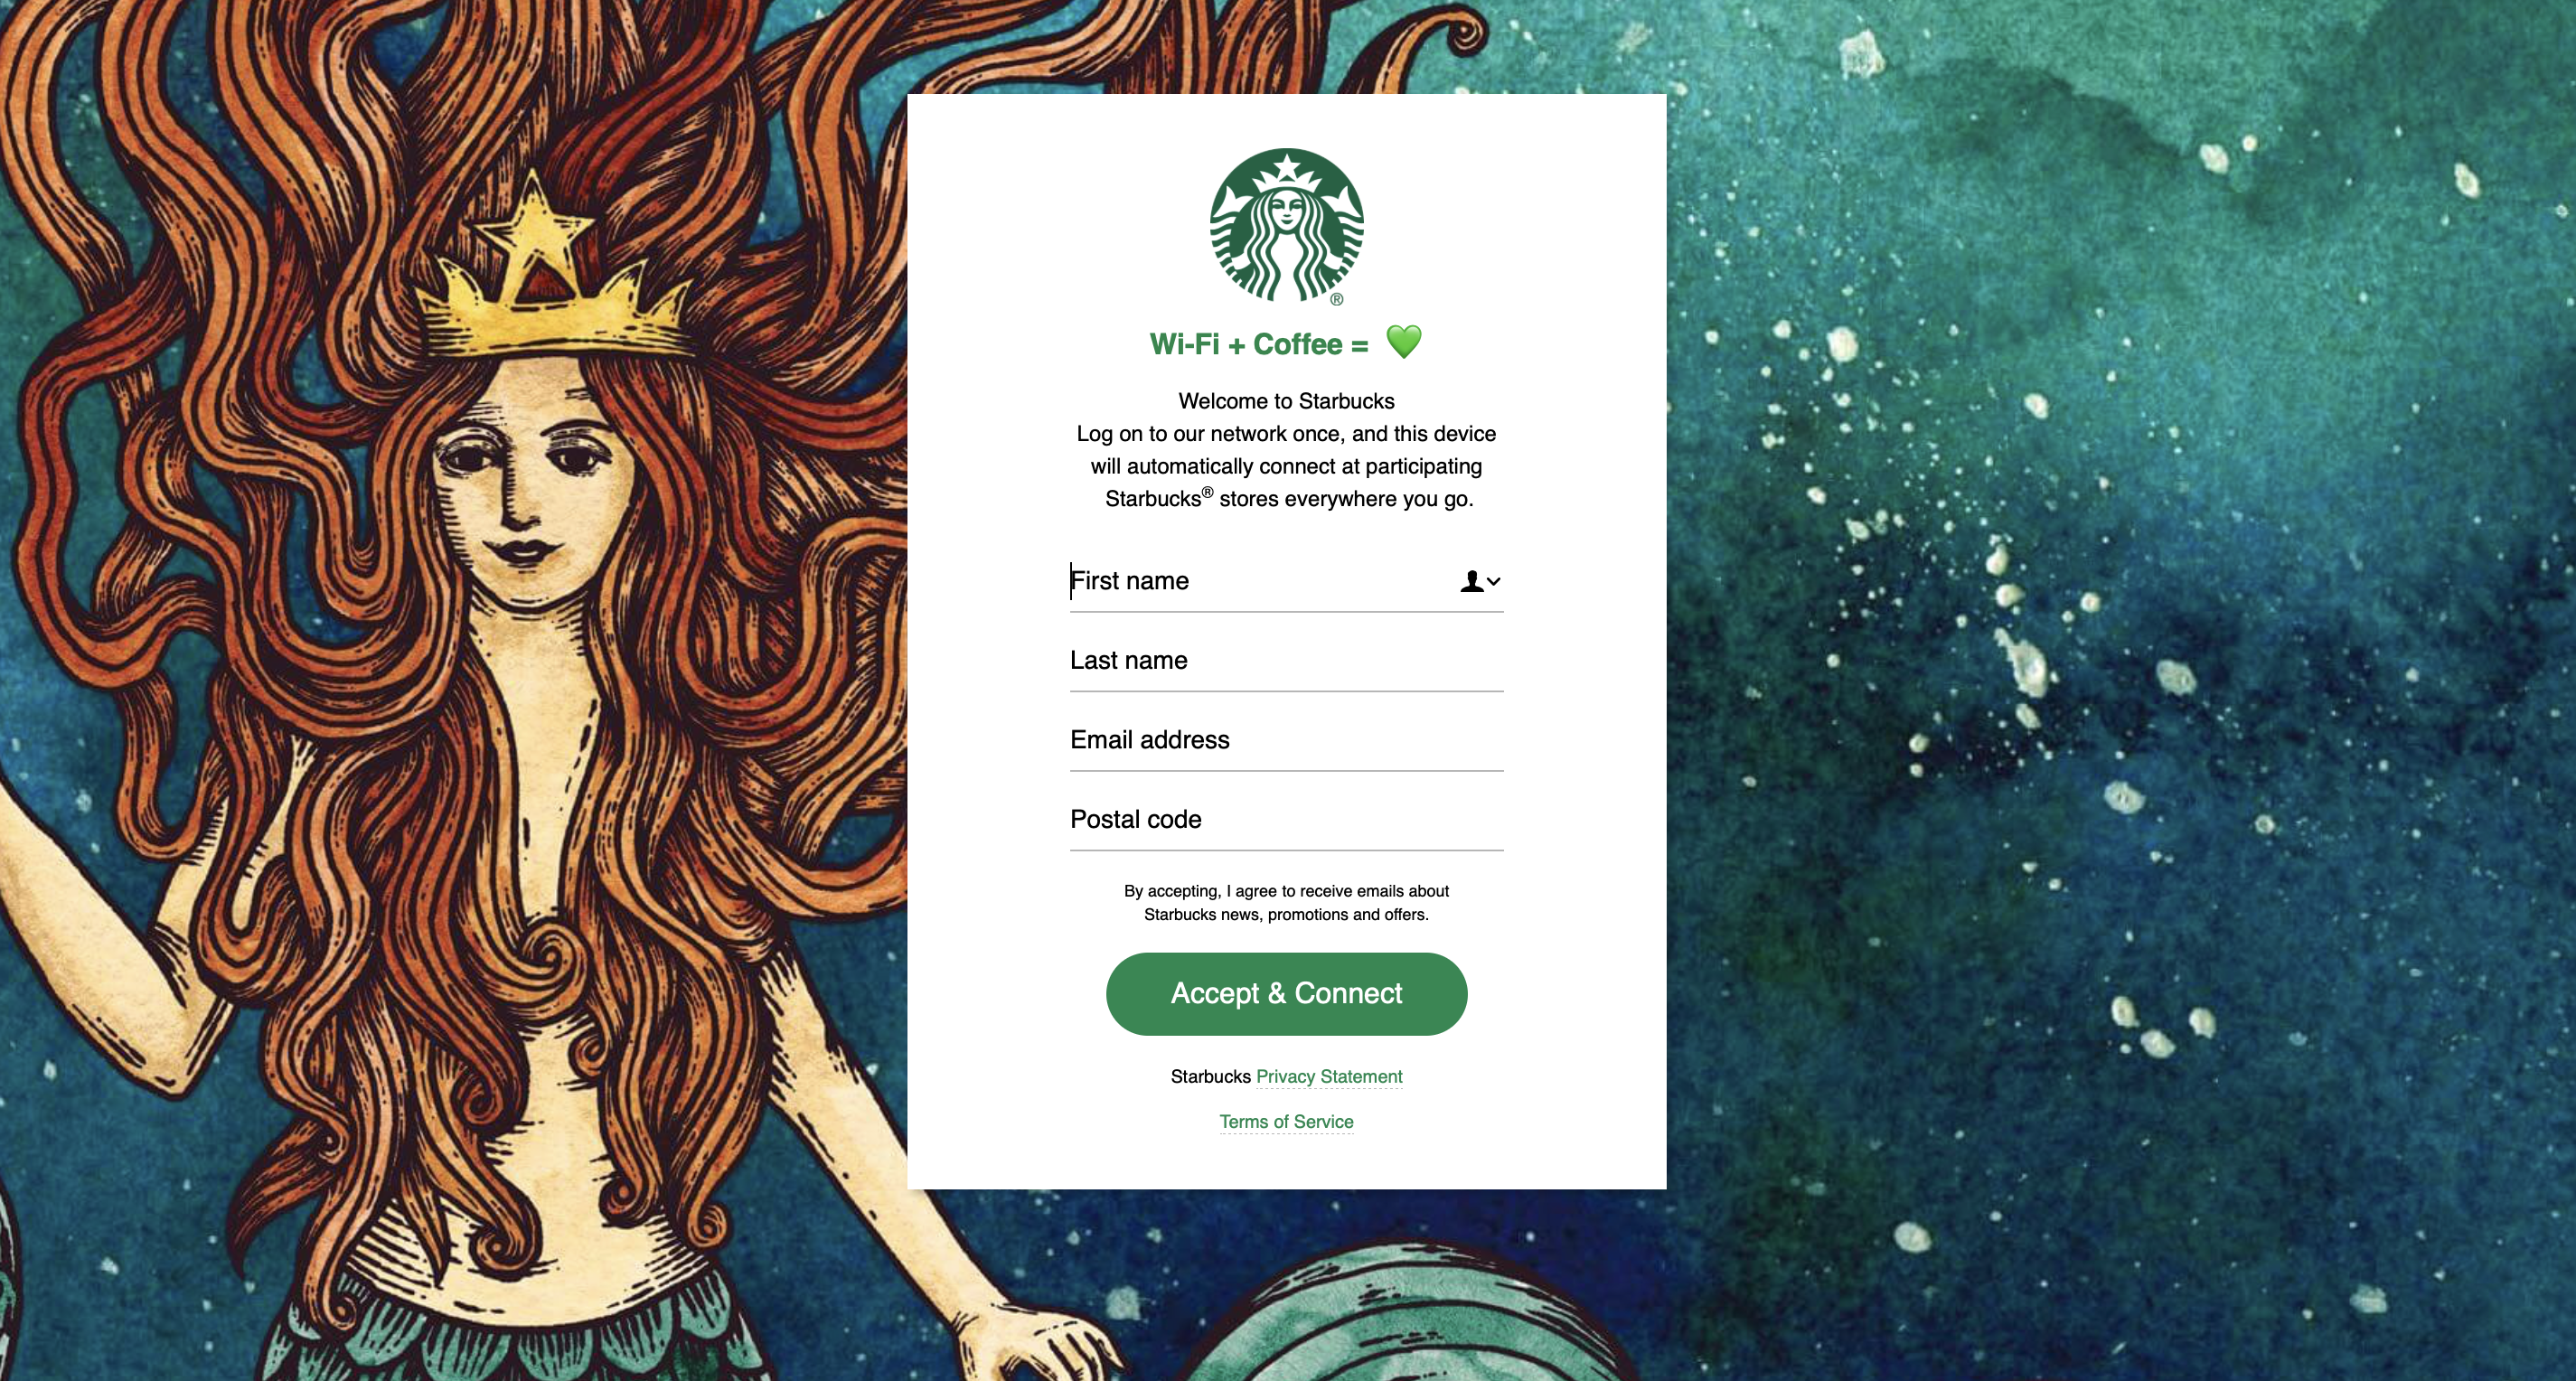 Google Starbucks signup page